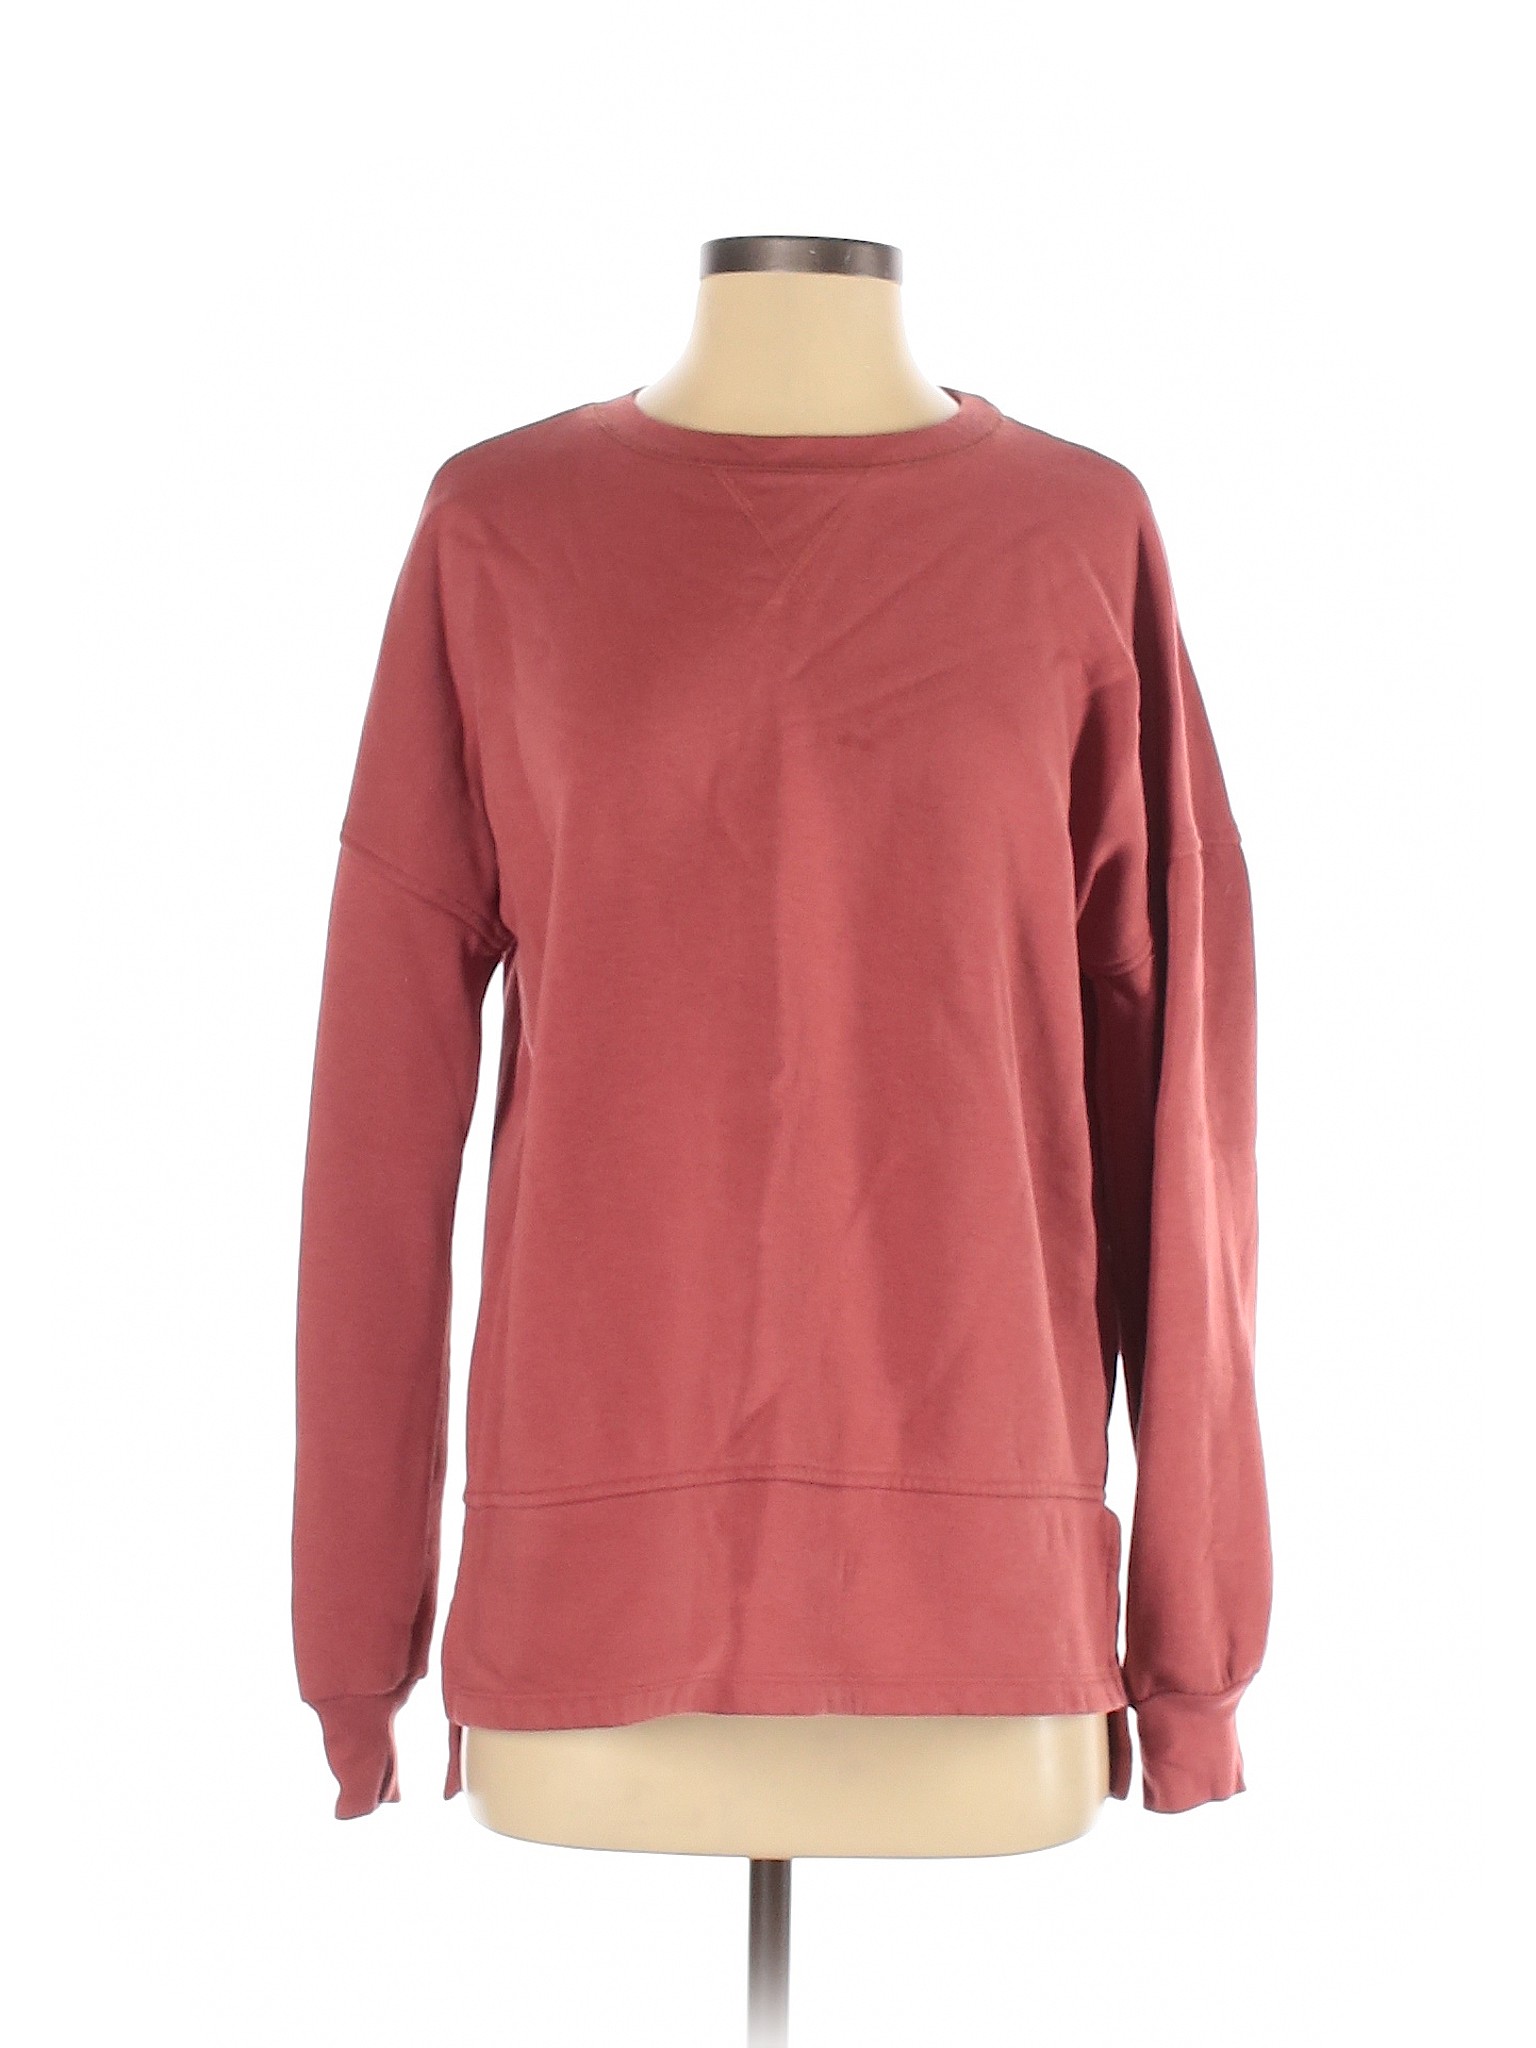 Universal Thread Women Red Sweatshirt S | eBay